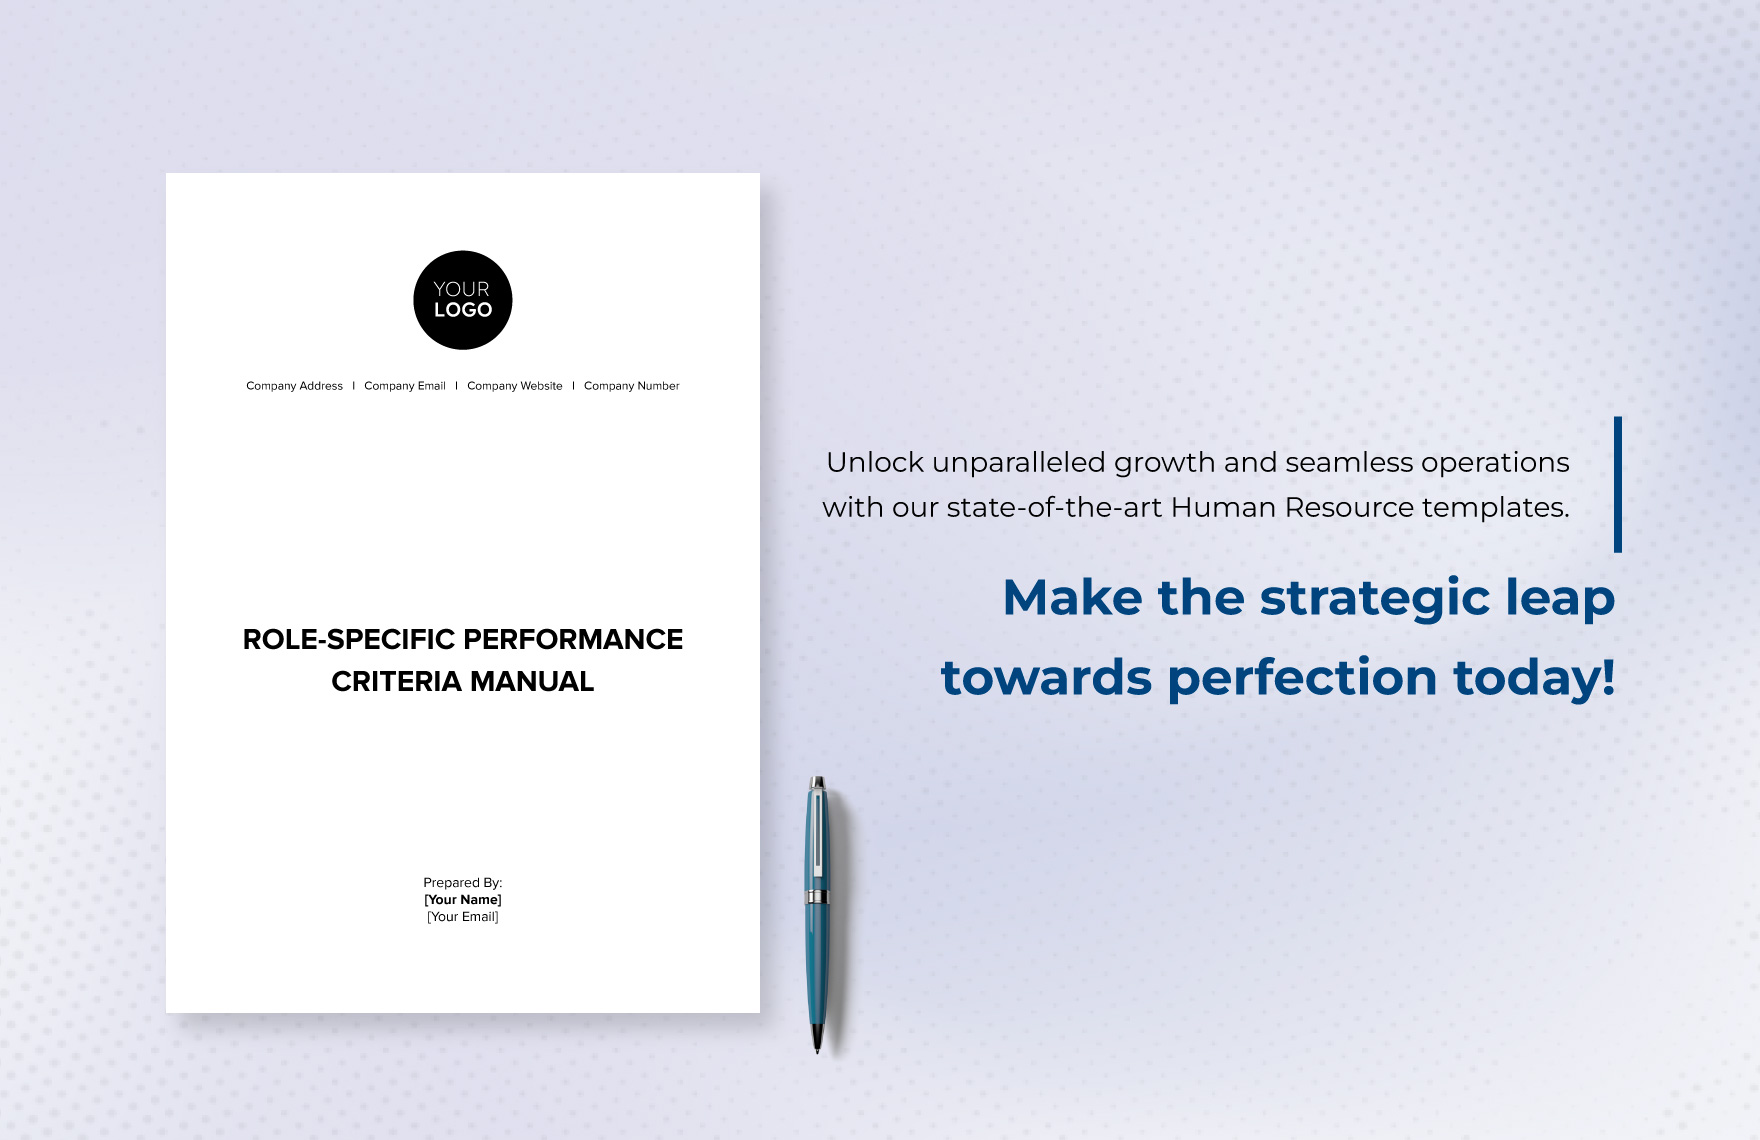  Role-specific Performance Criteria Manual HR Template